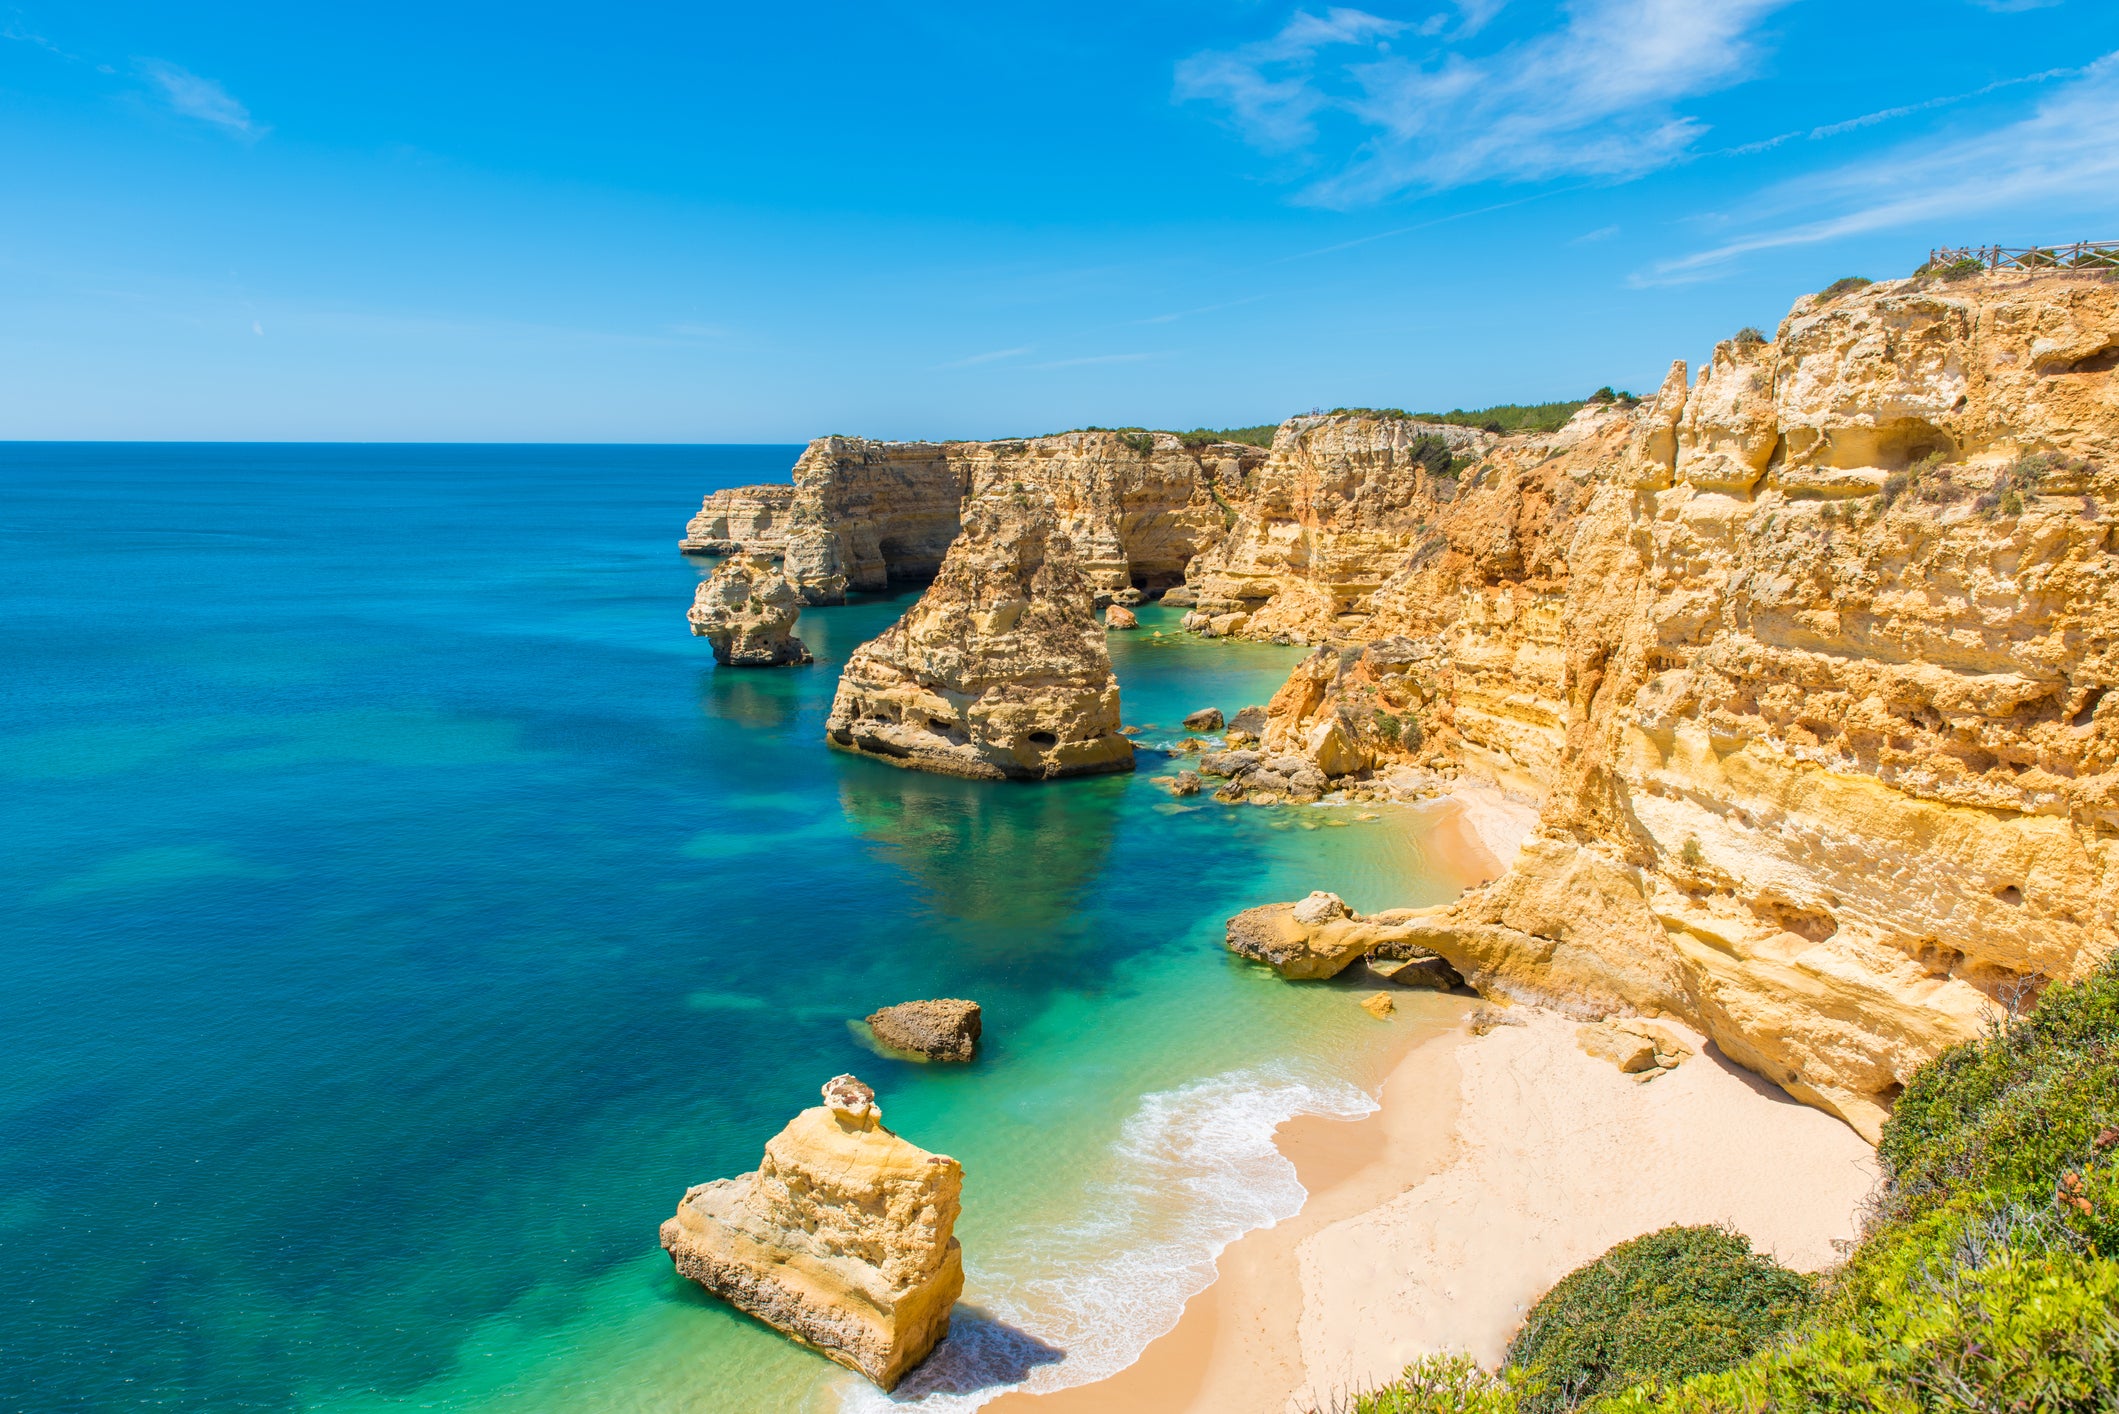 Praia da Marinha is one of the Algarve’s most photogenic beaches